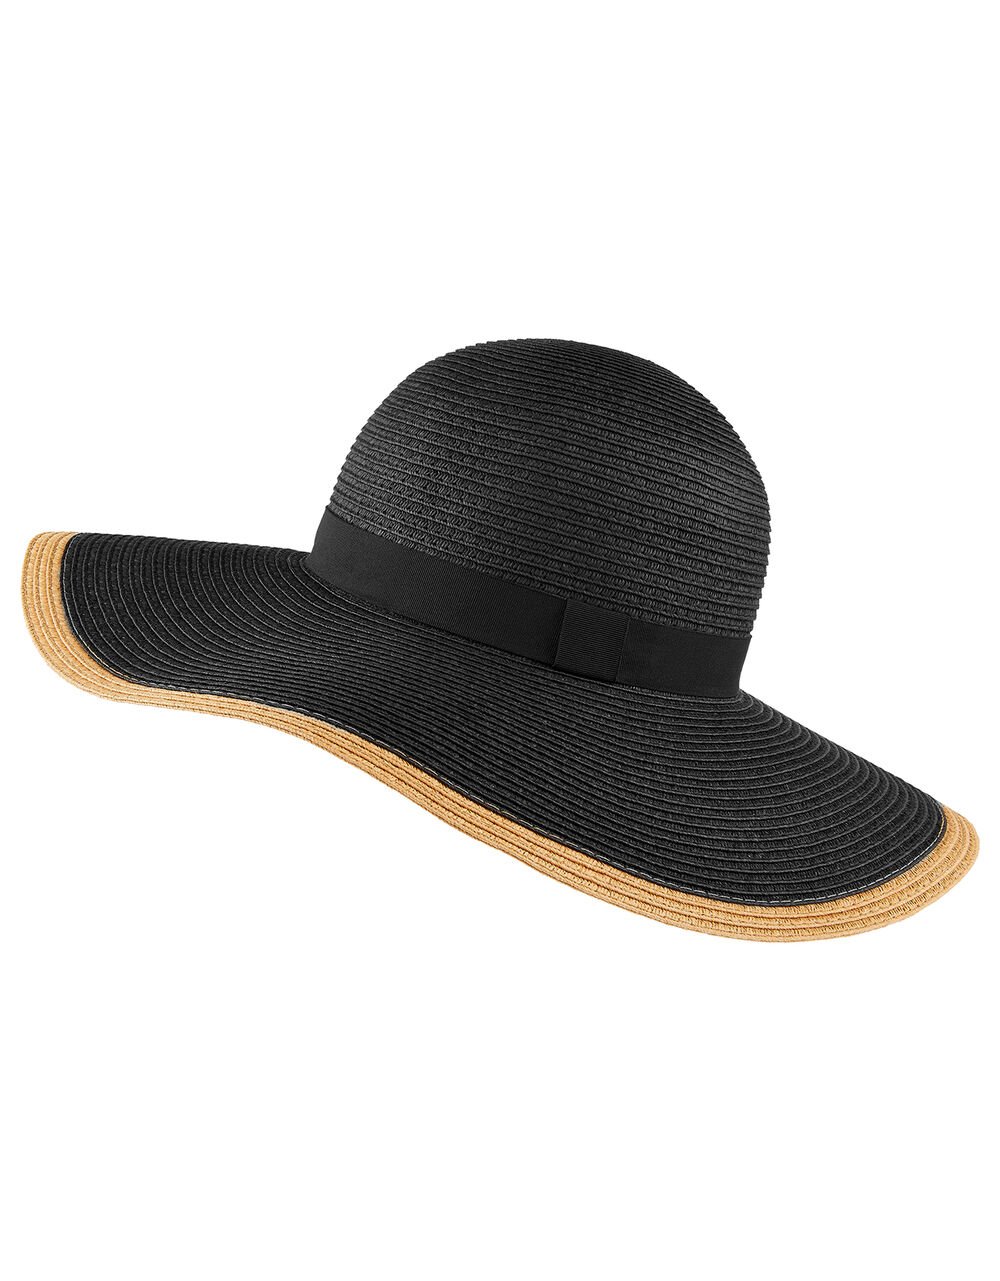 Contrast Edge Floppy Hat, Black (BLACK), large